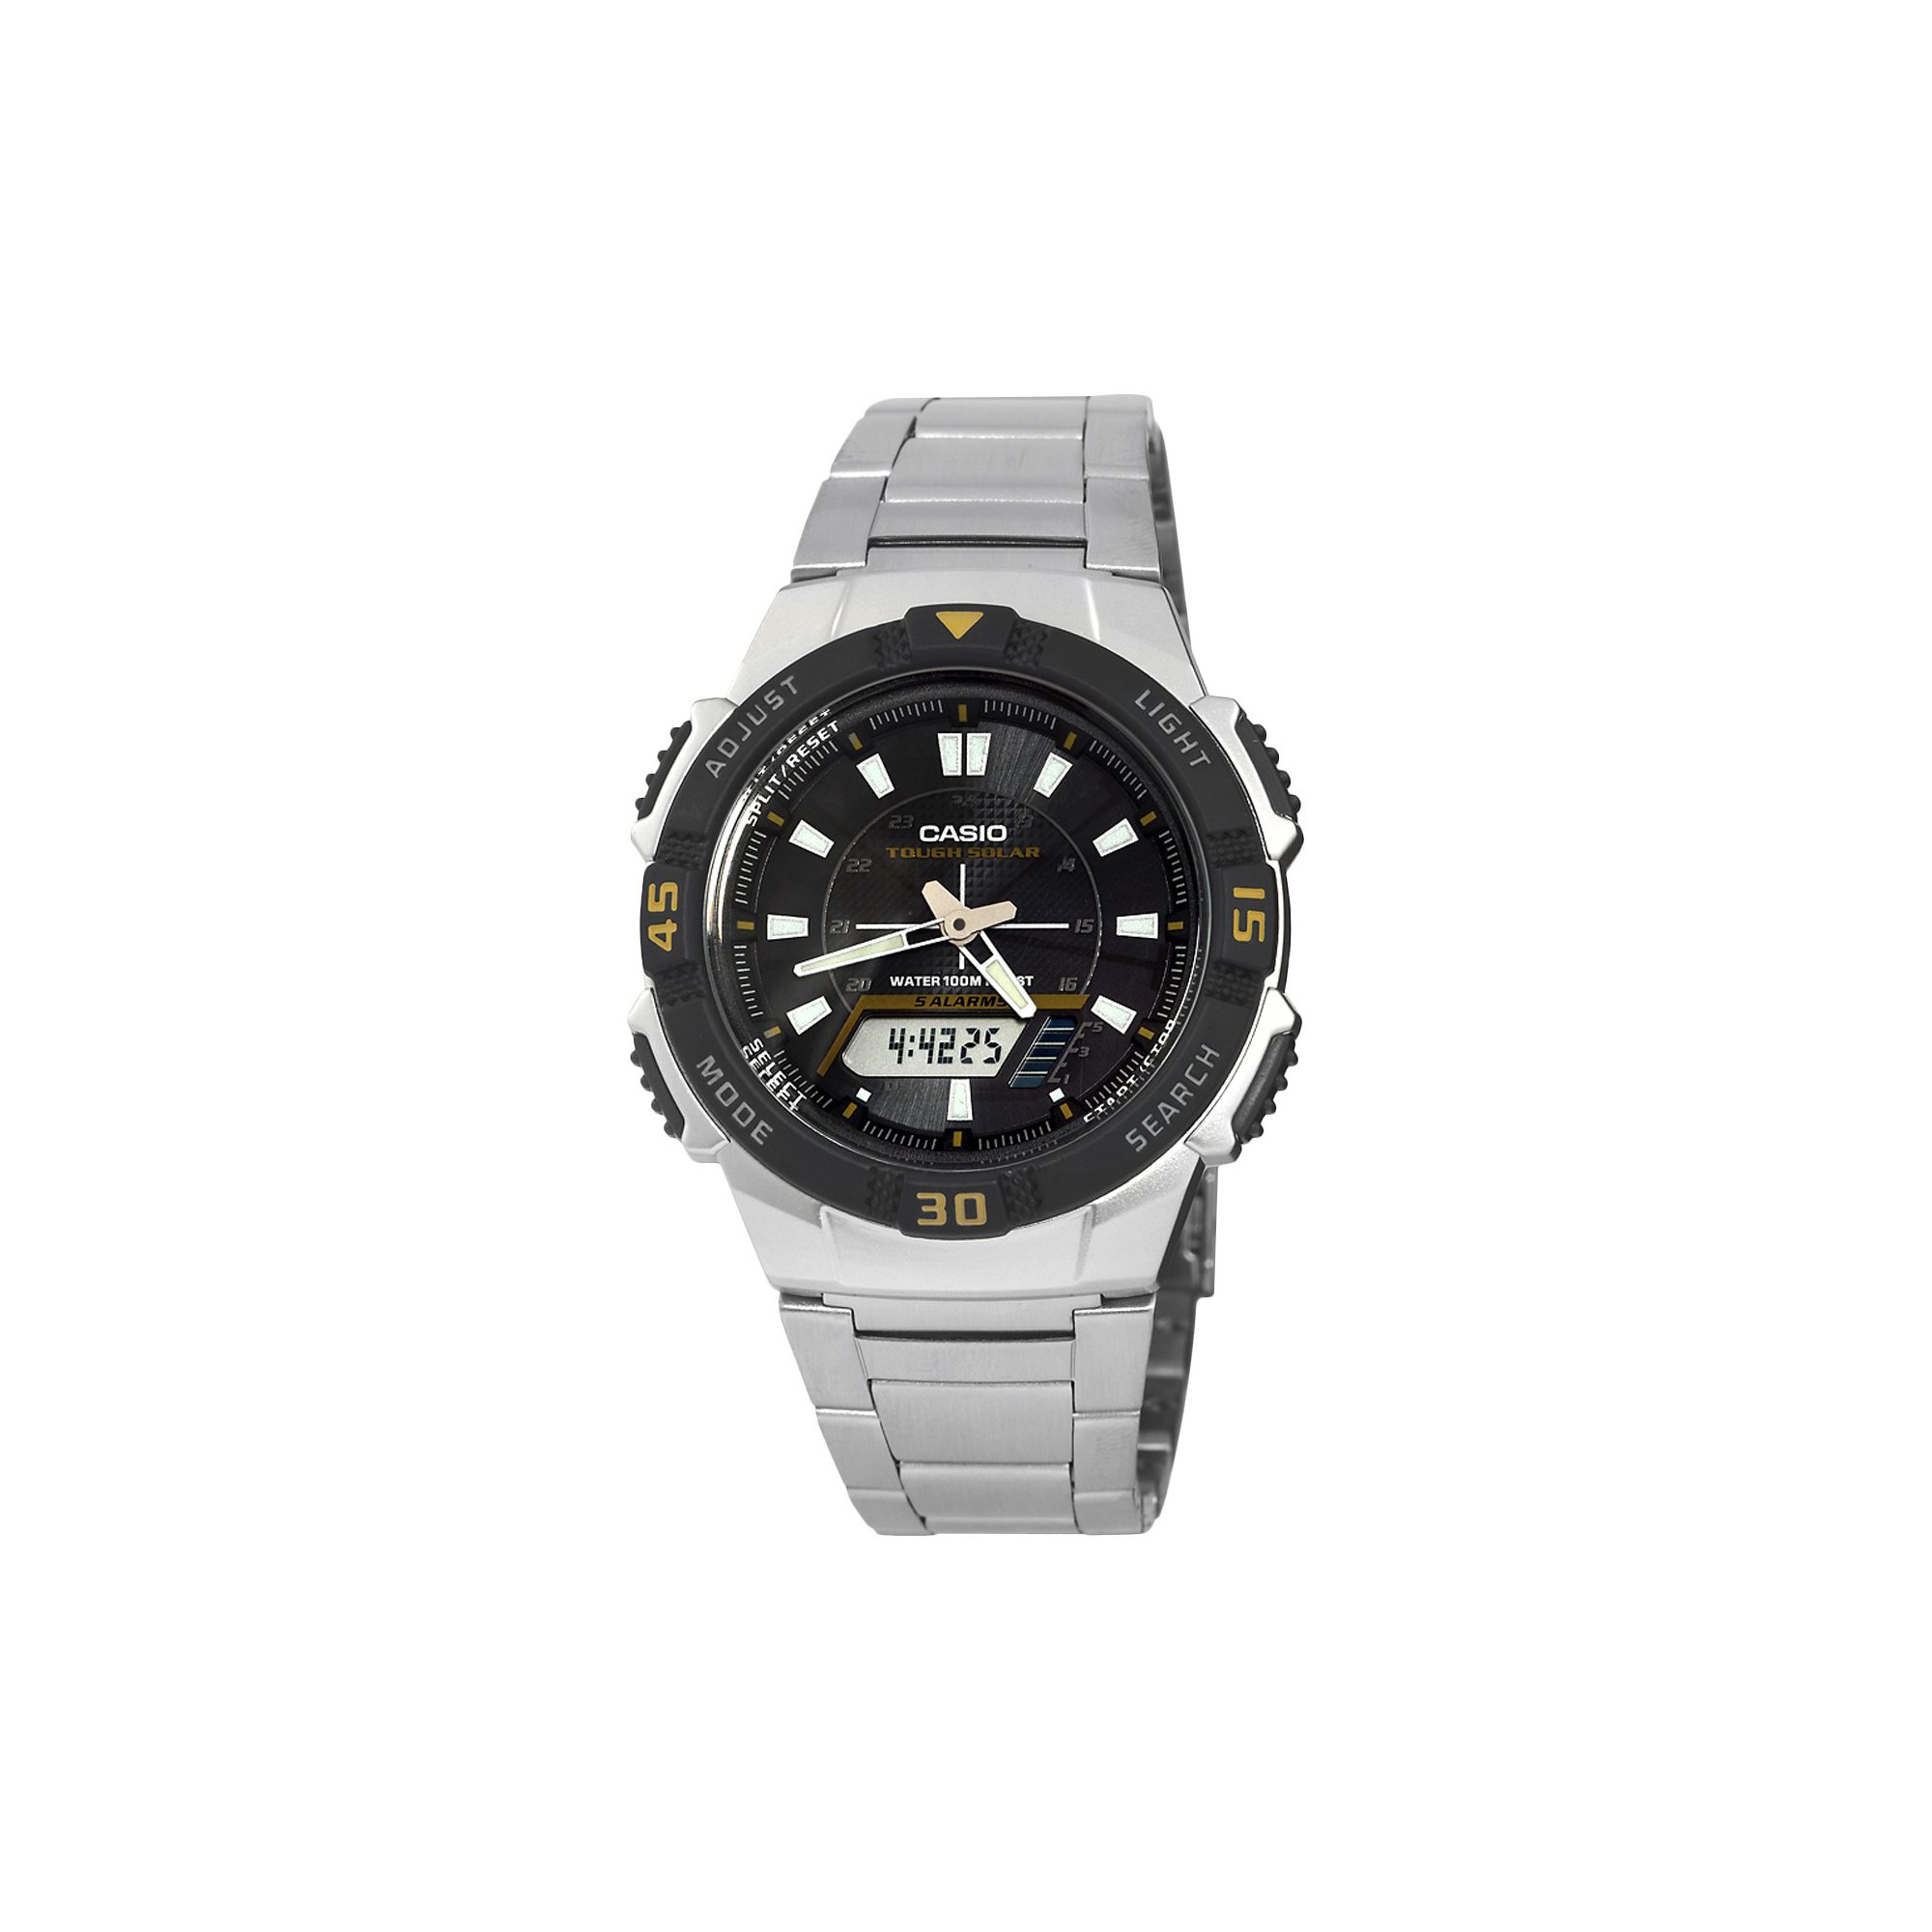 Casio Men's Slim Solar Watch - Silver (AQS800WD-1EV), Size: Small